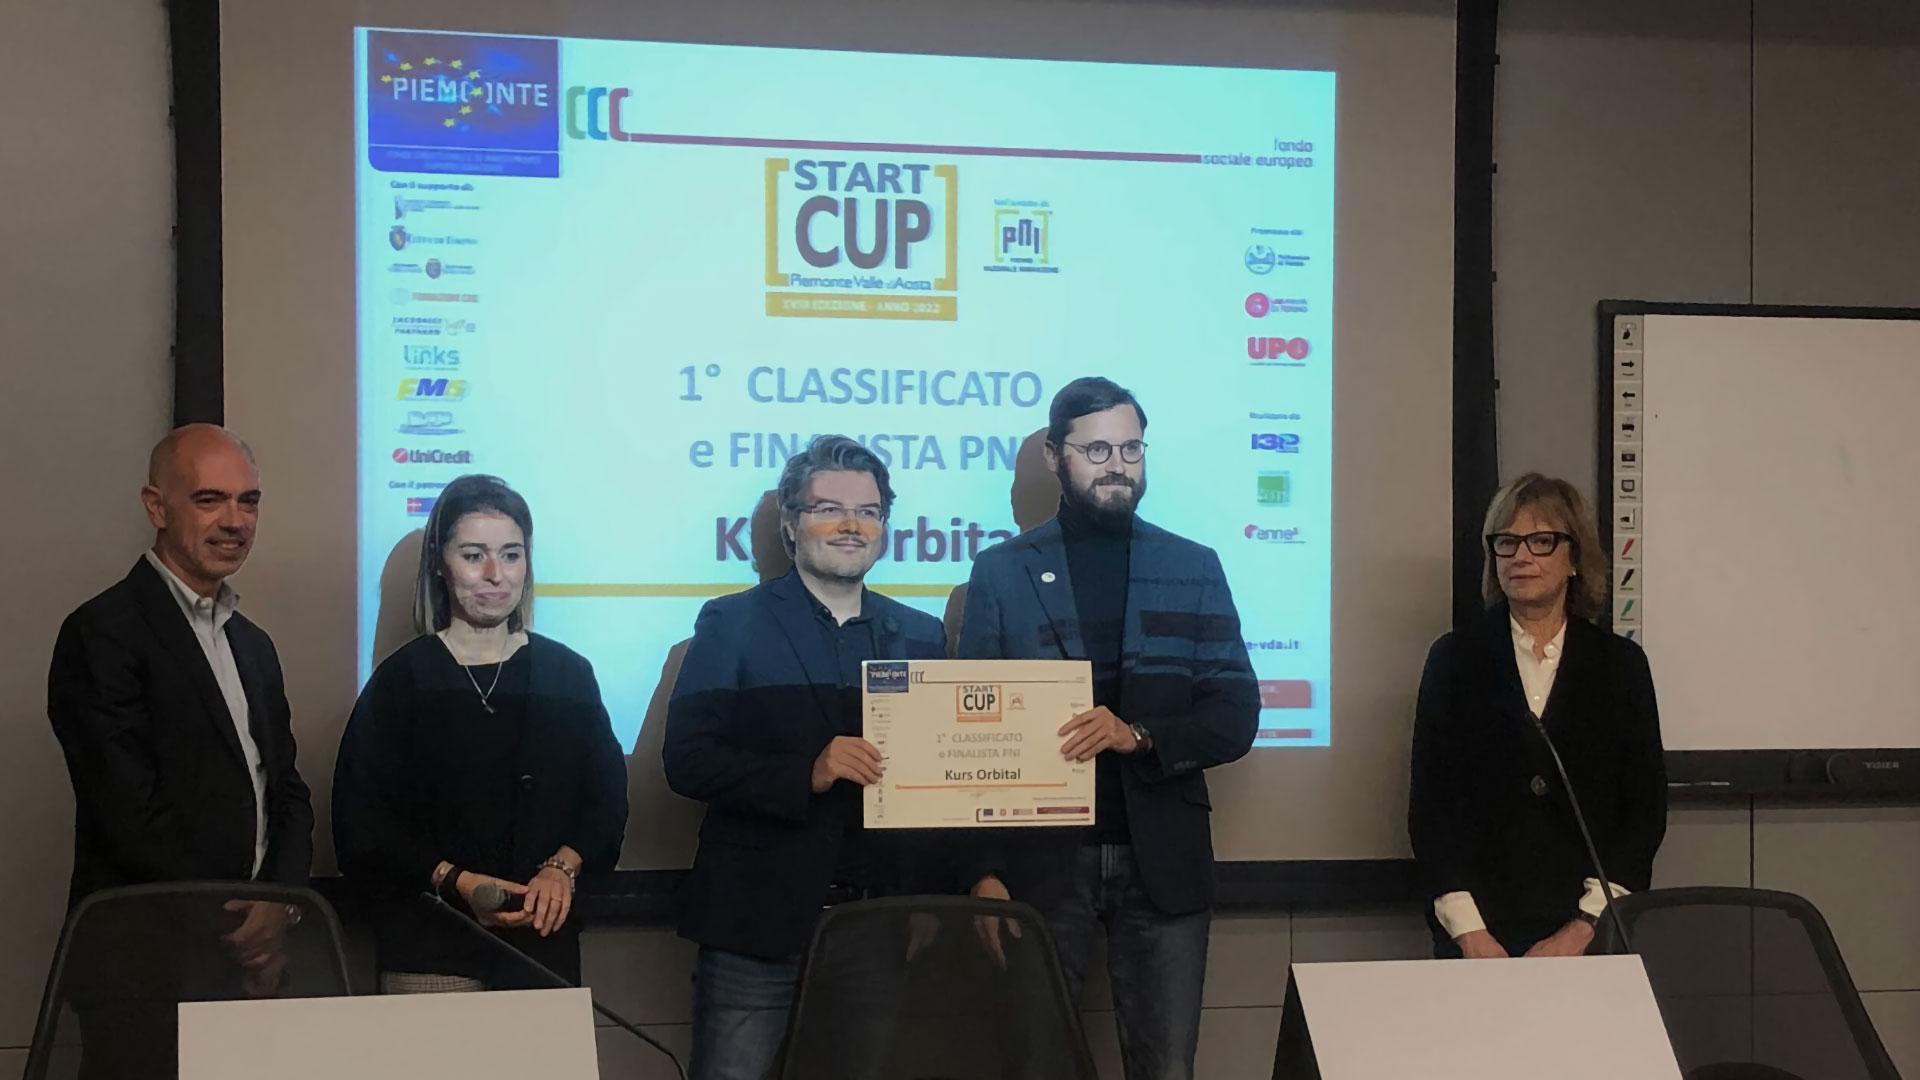 Kurs Orbital vince la Start Cup Piemonte e Valle d’Aosta